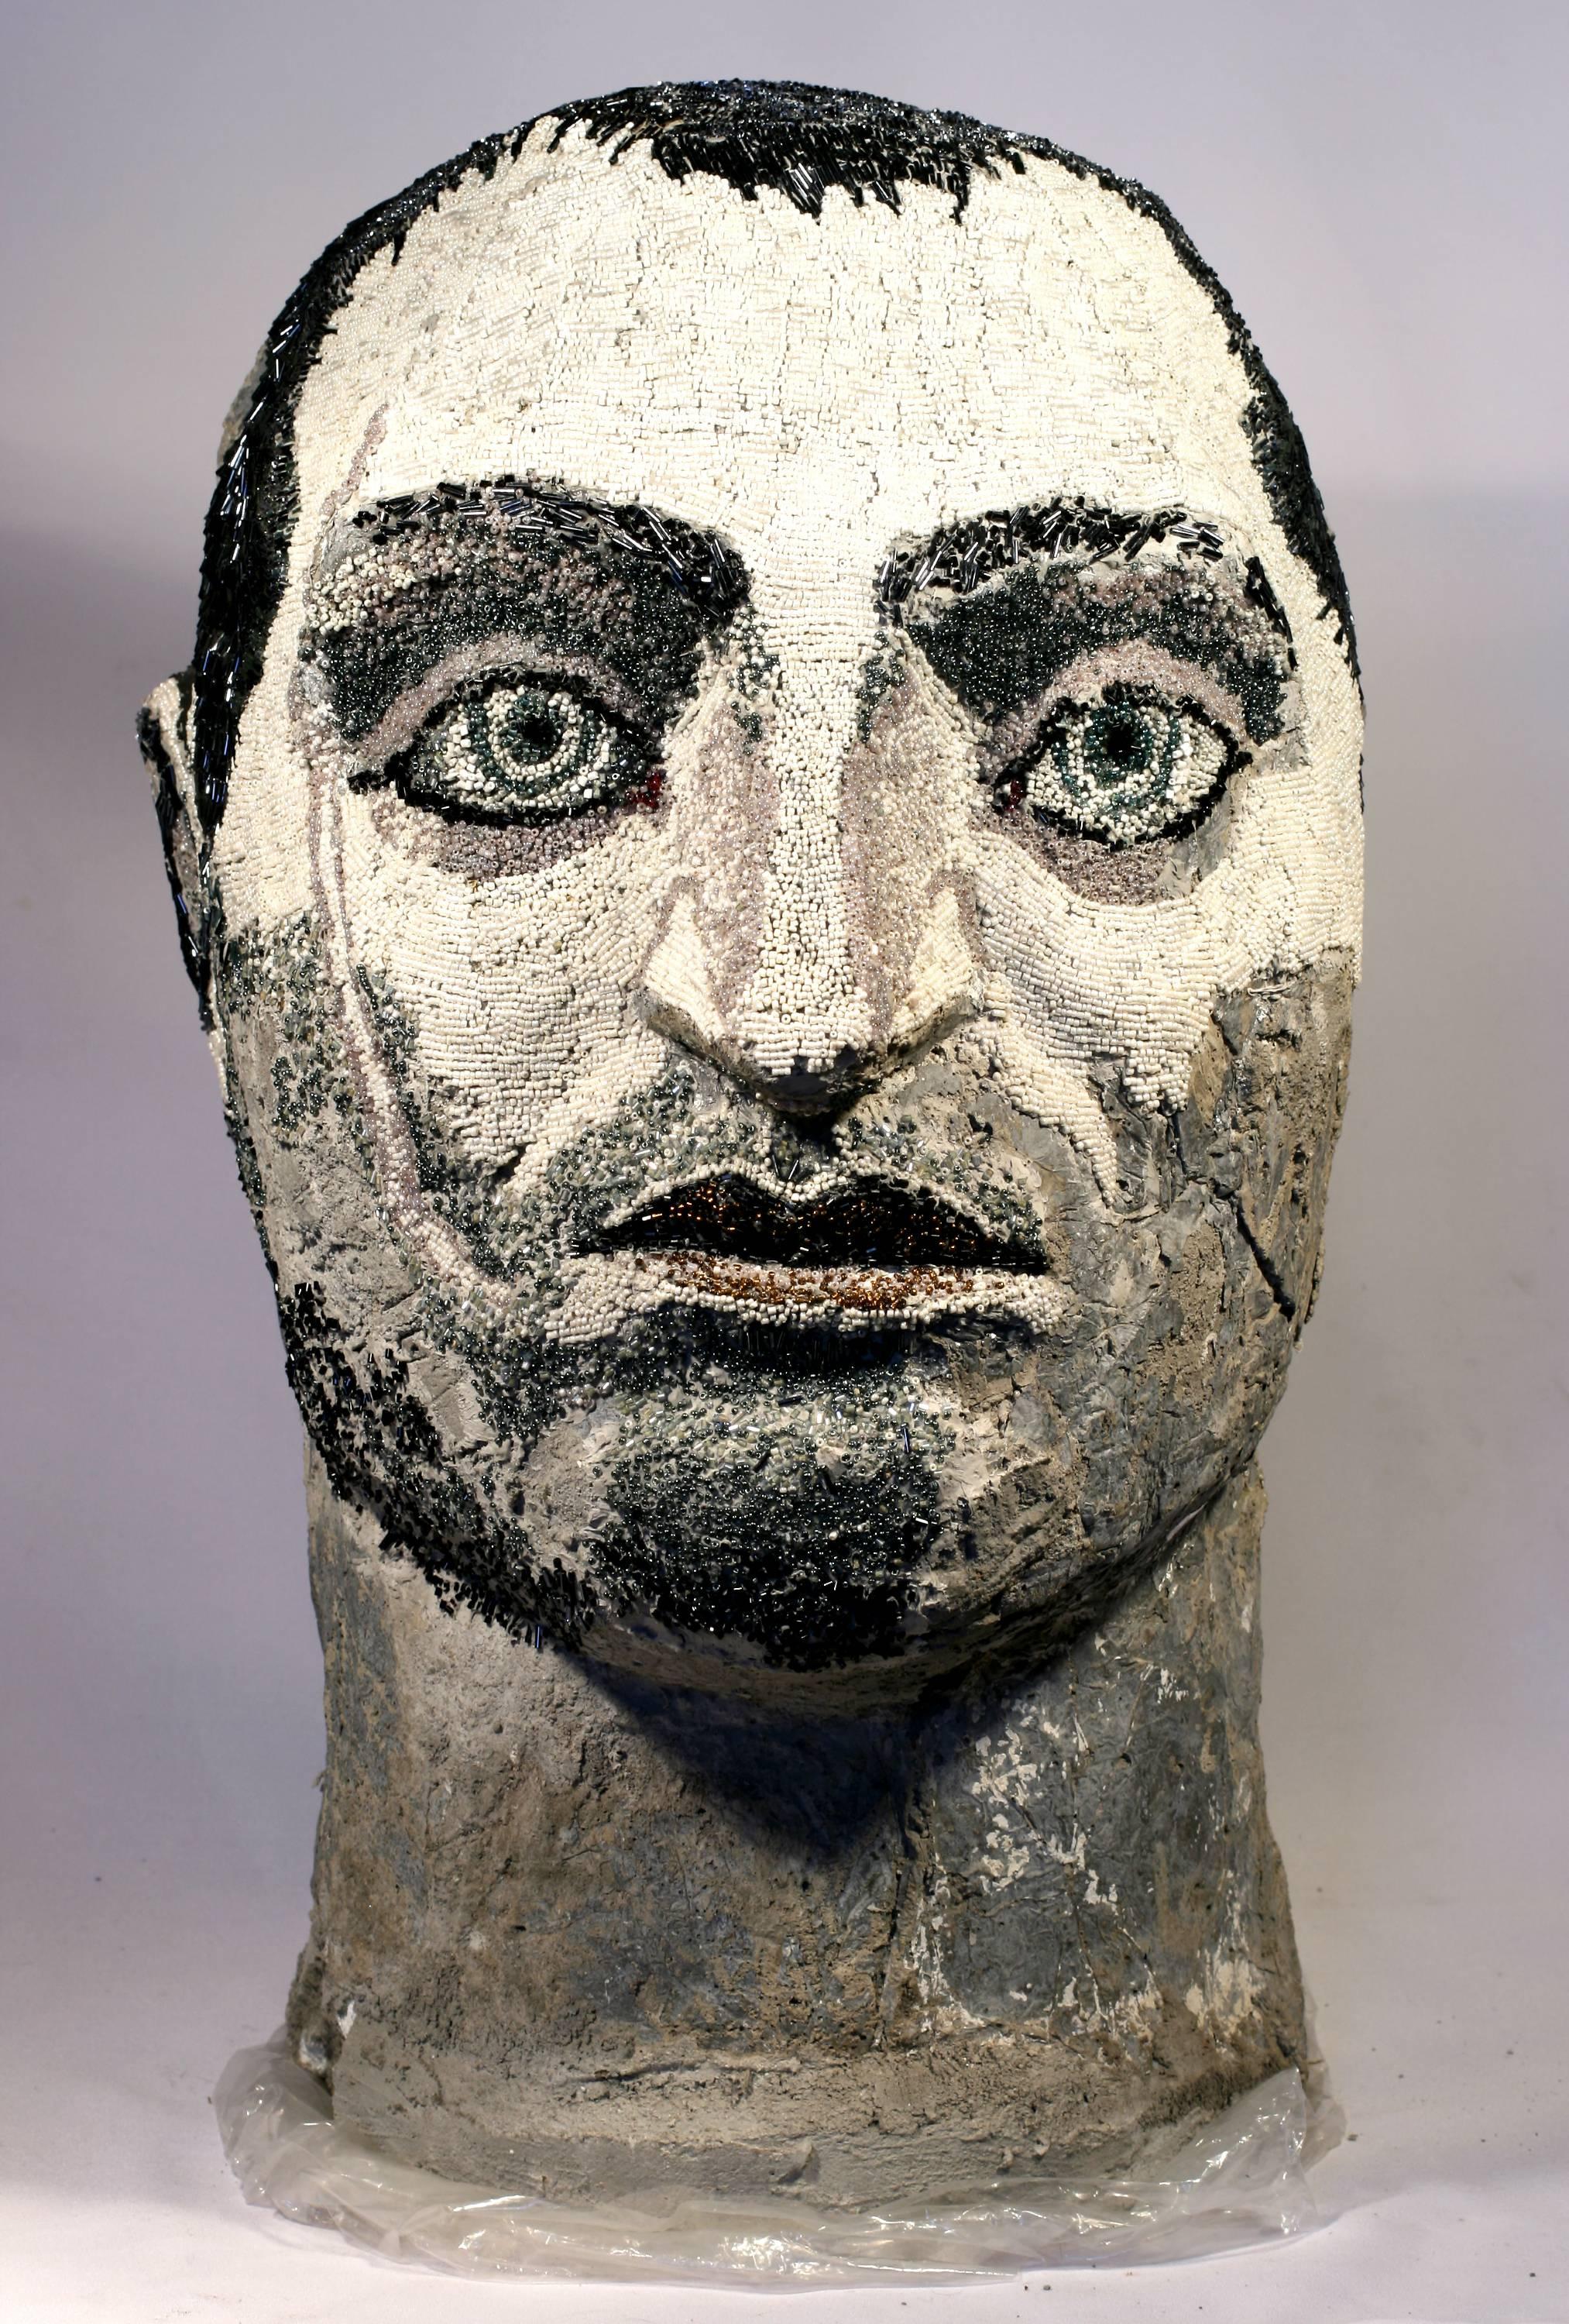 Alexandru Rădvan Figurative Sculpture - Pagan Christian - 21st Century, Sculpture, Male, Portrait, Gray, Figurative